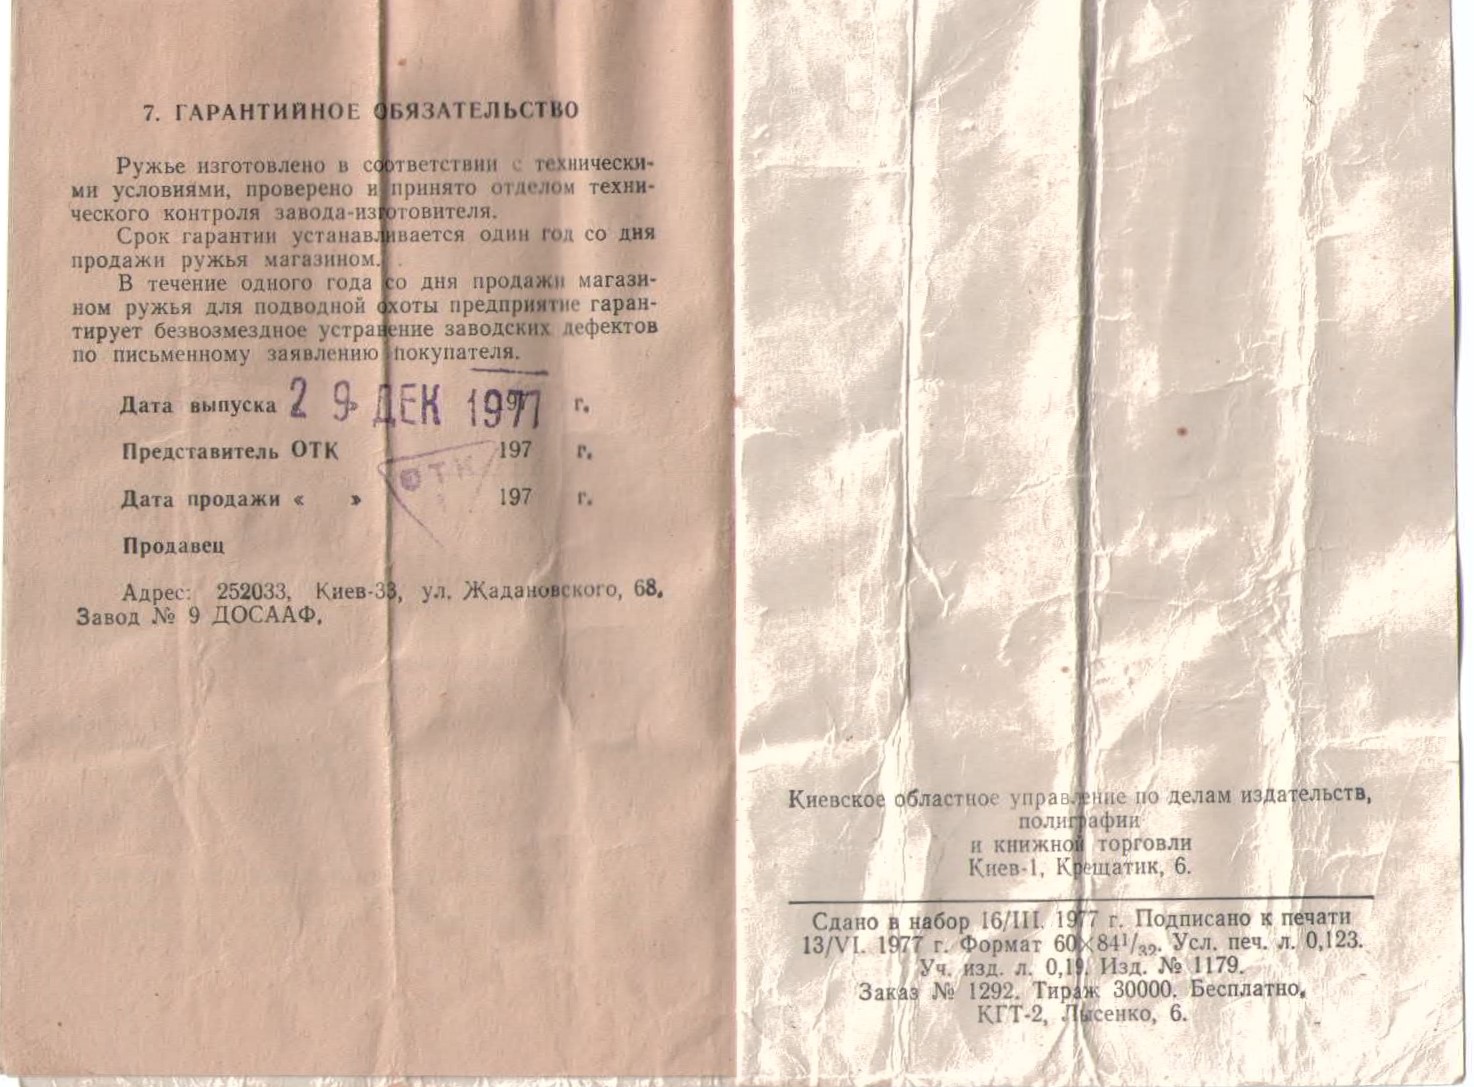 Soviet R model page 4, inside rear cover.jpg